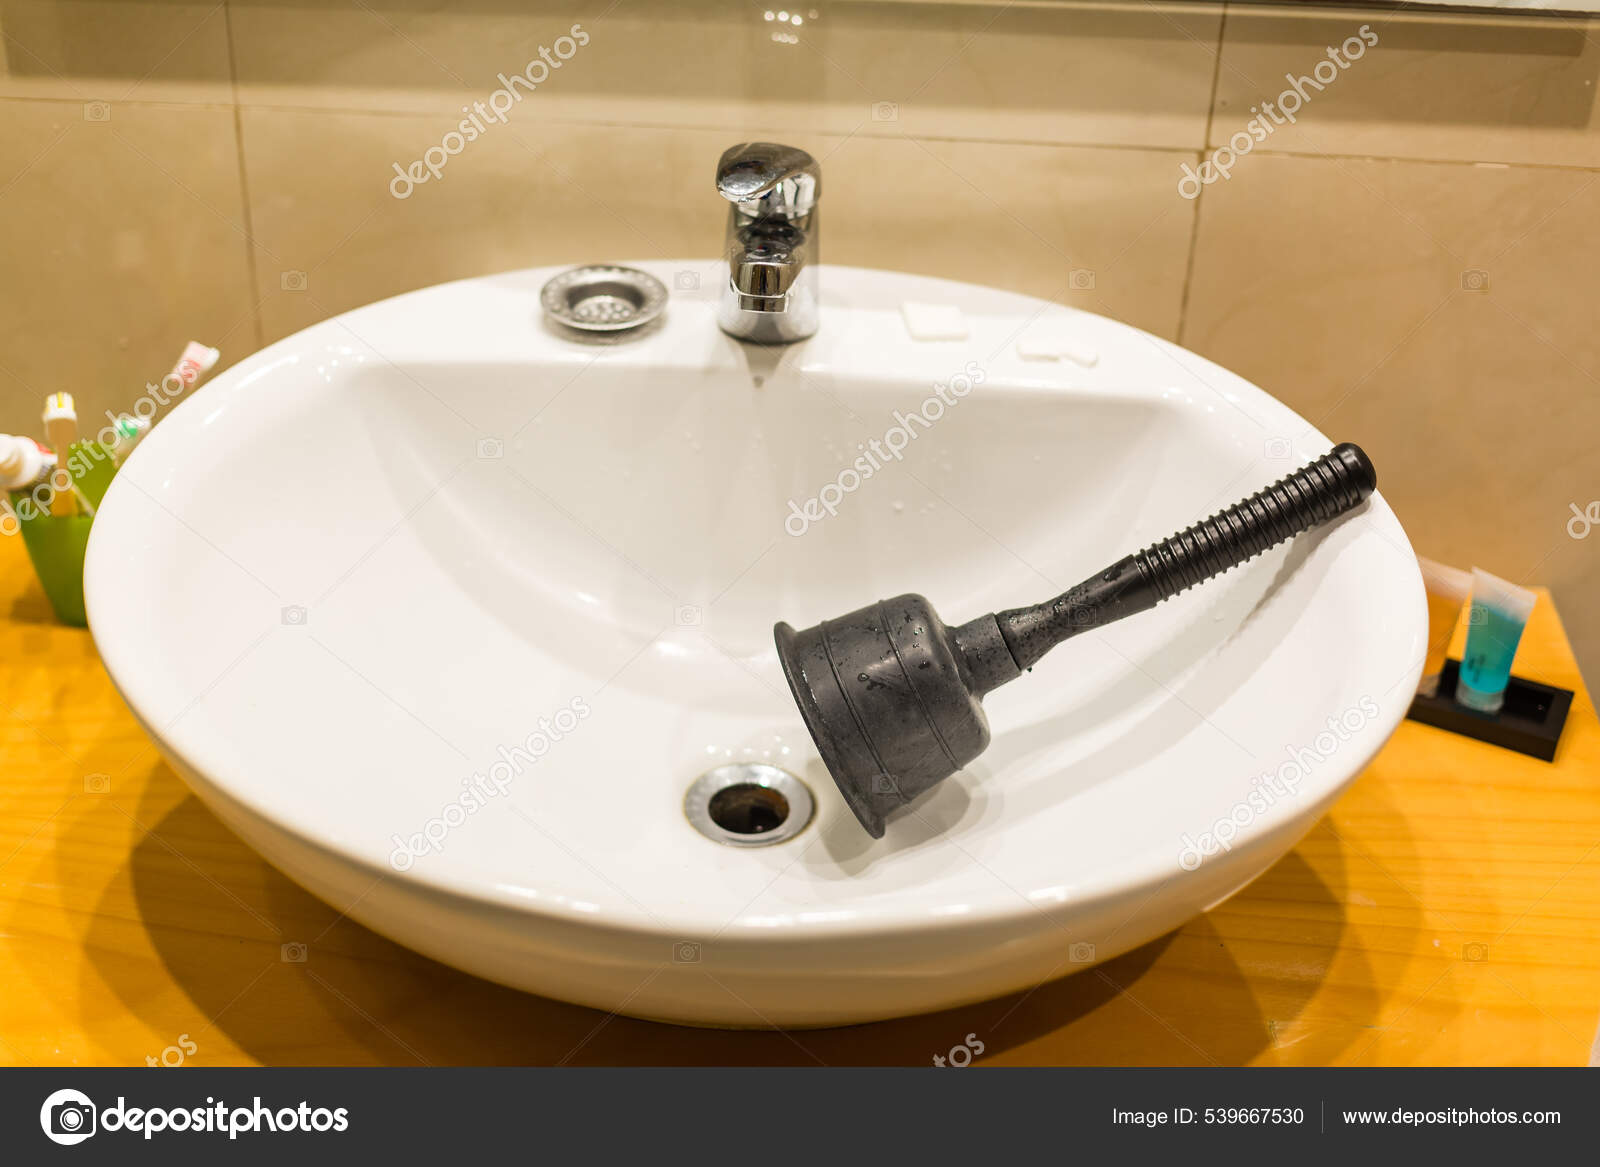 https://st.depositphotos.com/10894906/53966/i/1600/depositphotos_539667530-stock-photo-household-black-sink-plunger-tool.jpg